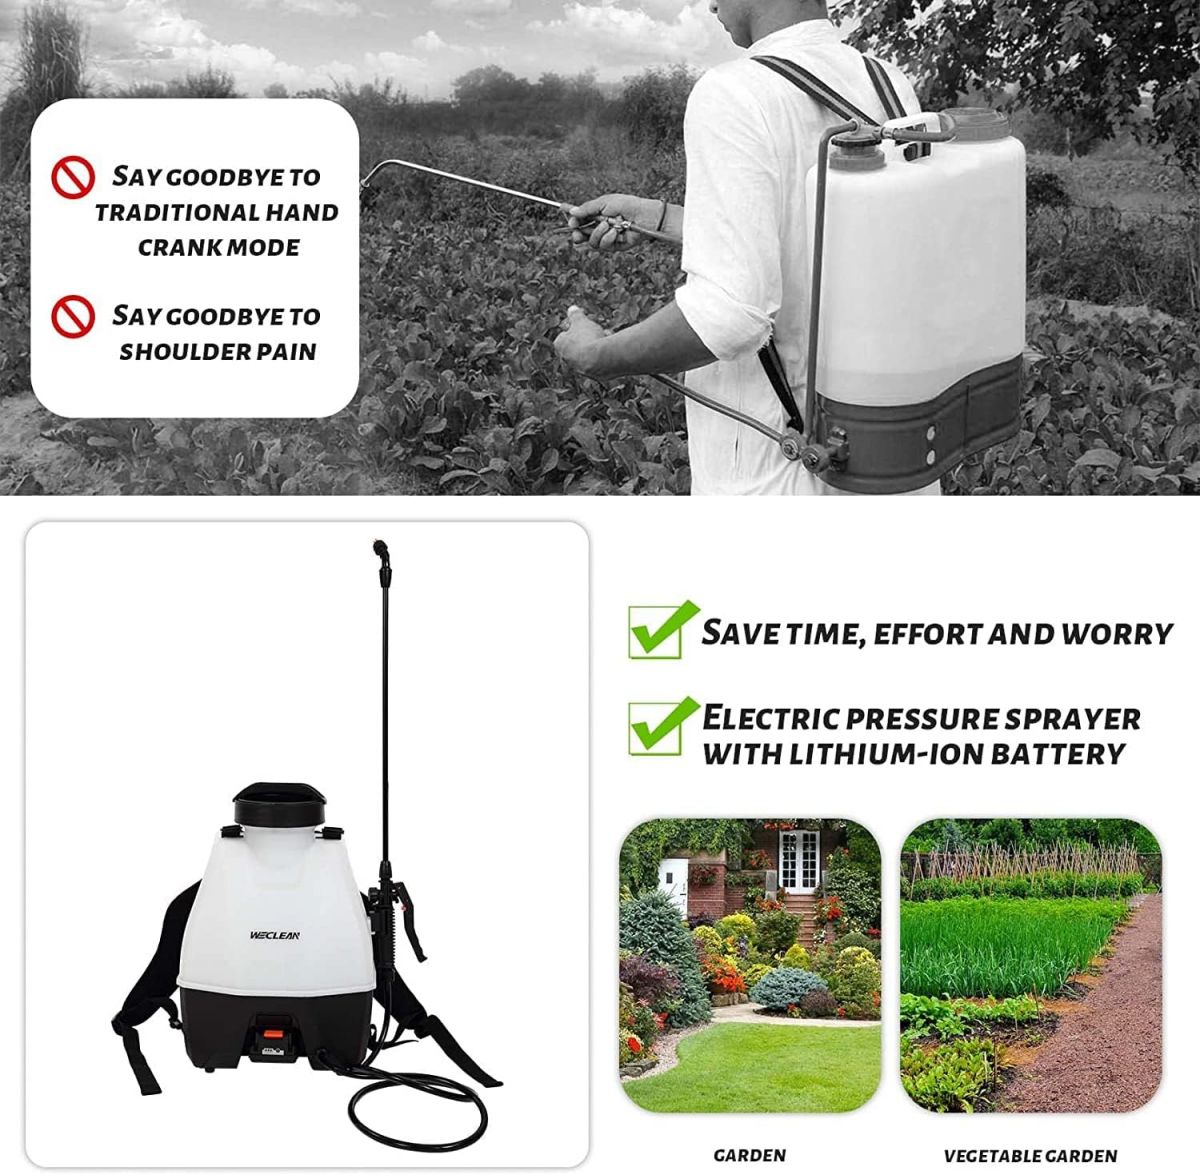 Battery garden sprayer WECLEAN 15l, backpack